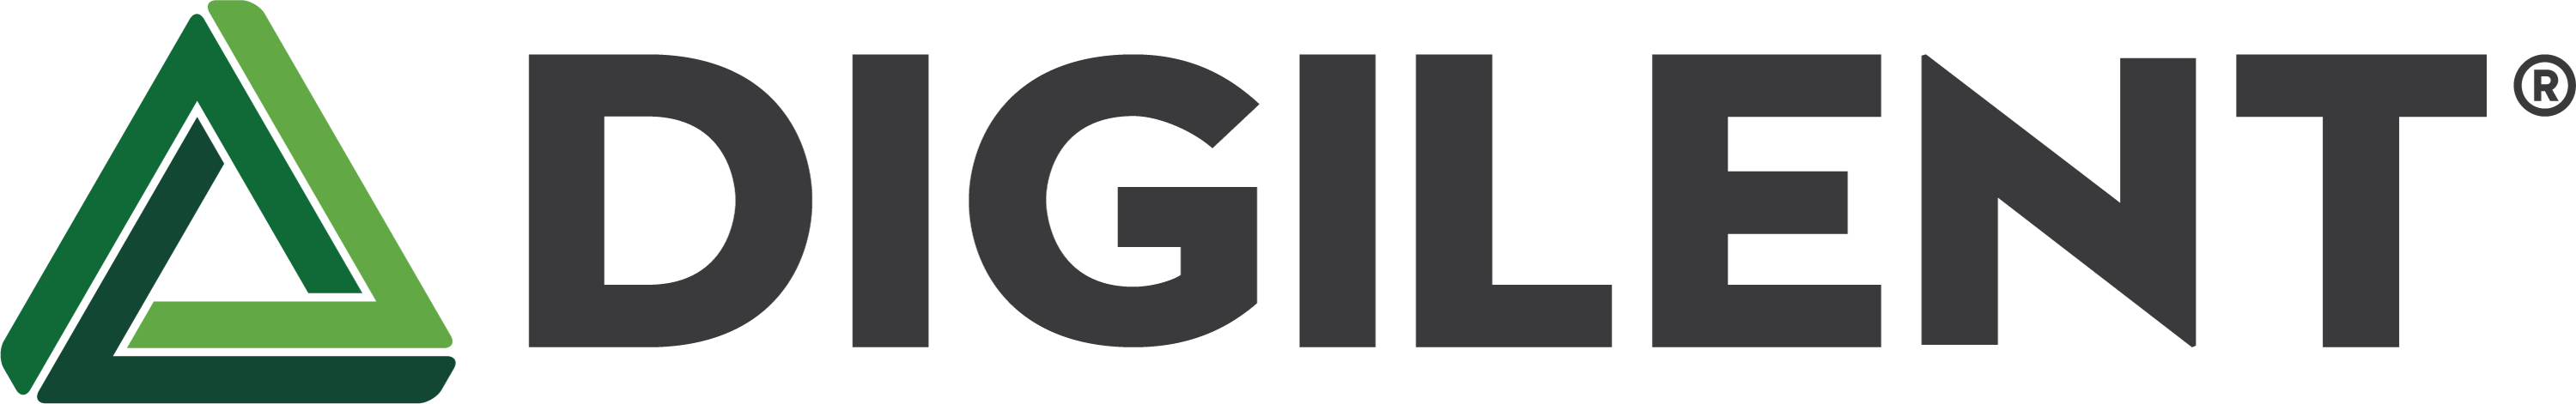 digilent-logo-3000.png